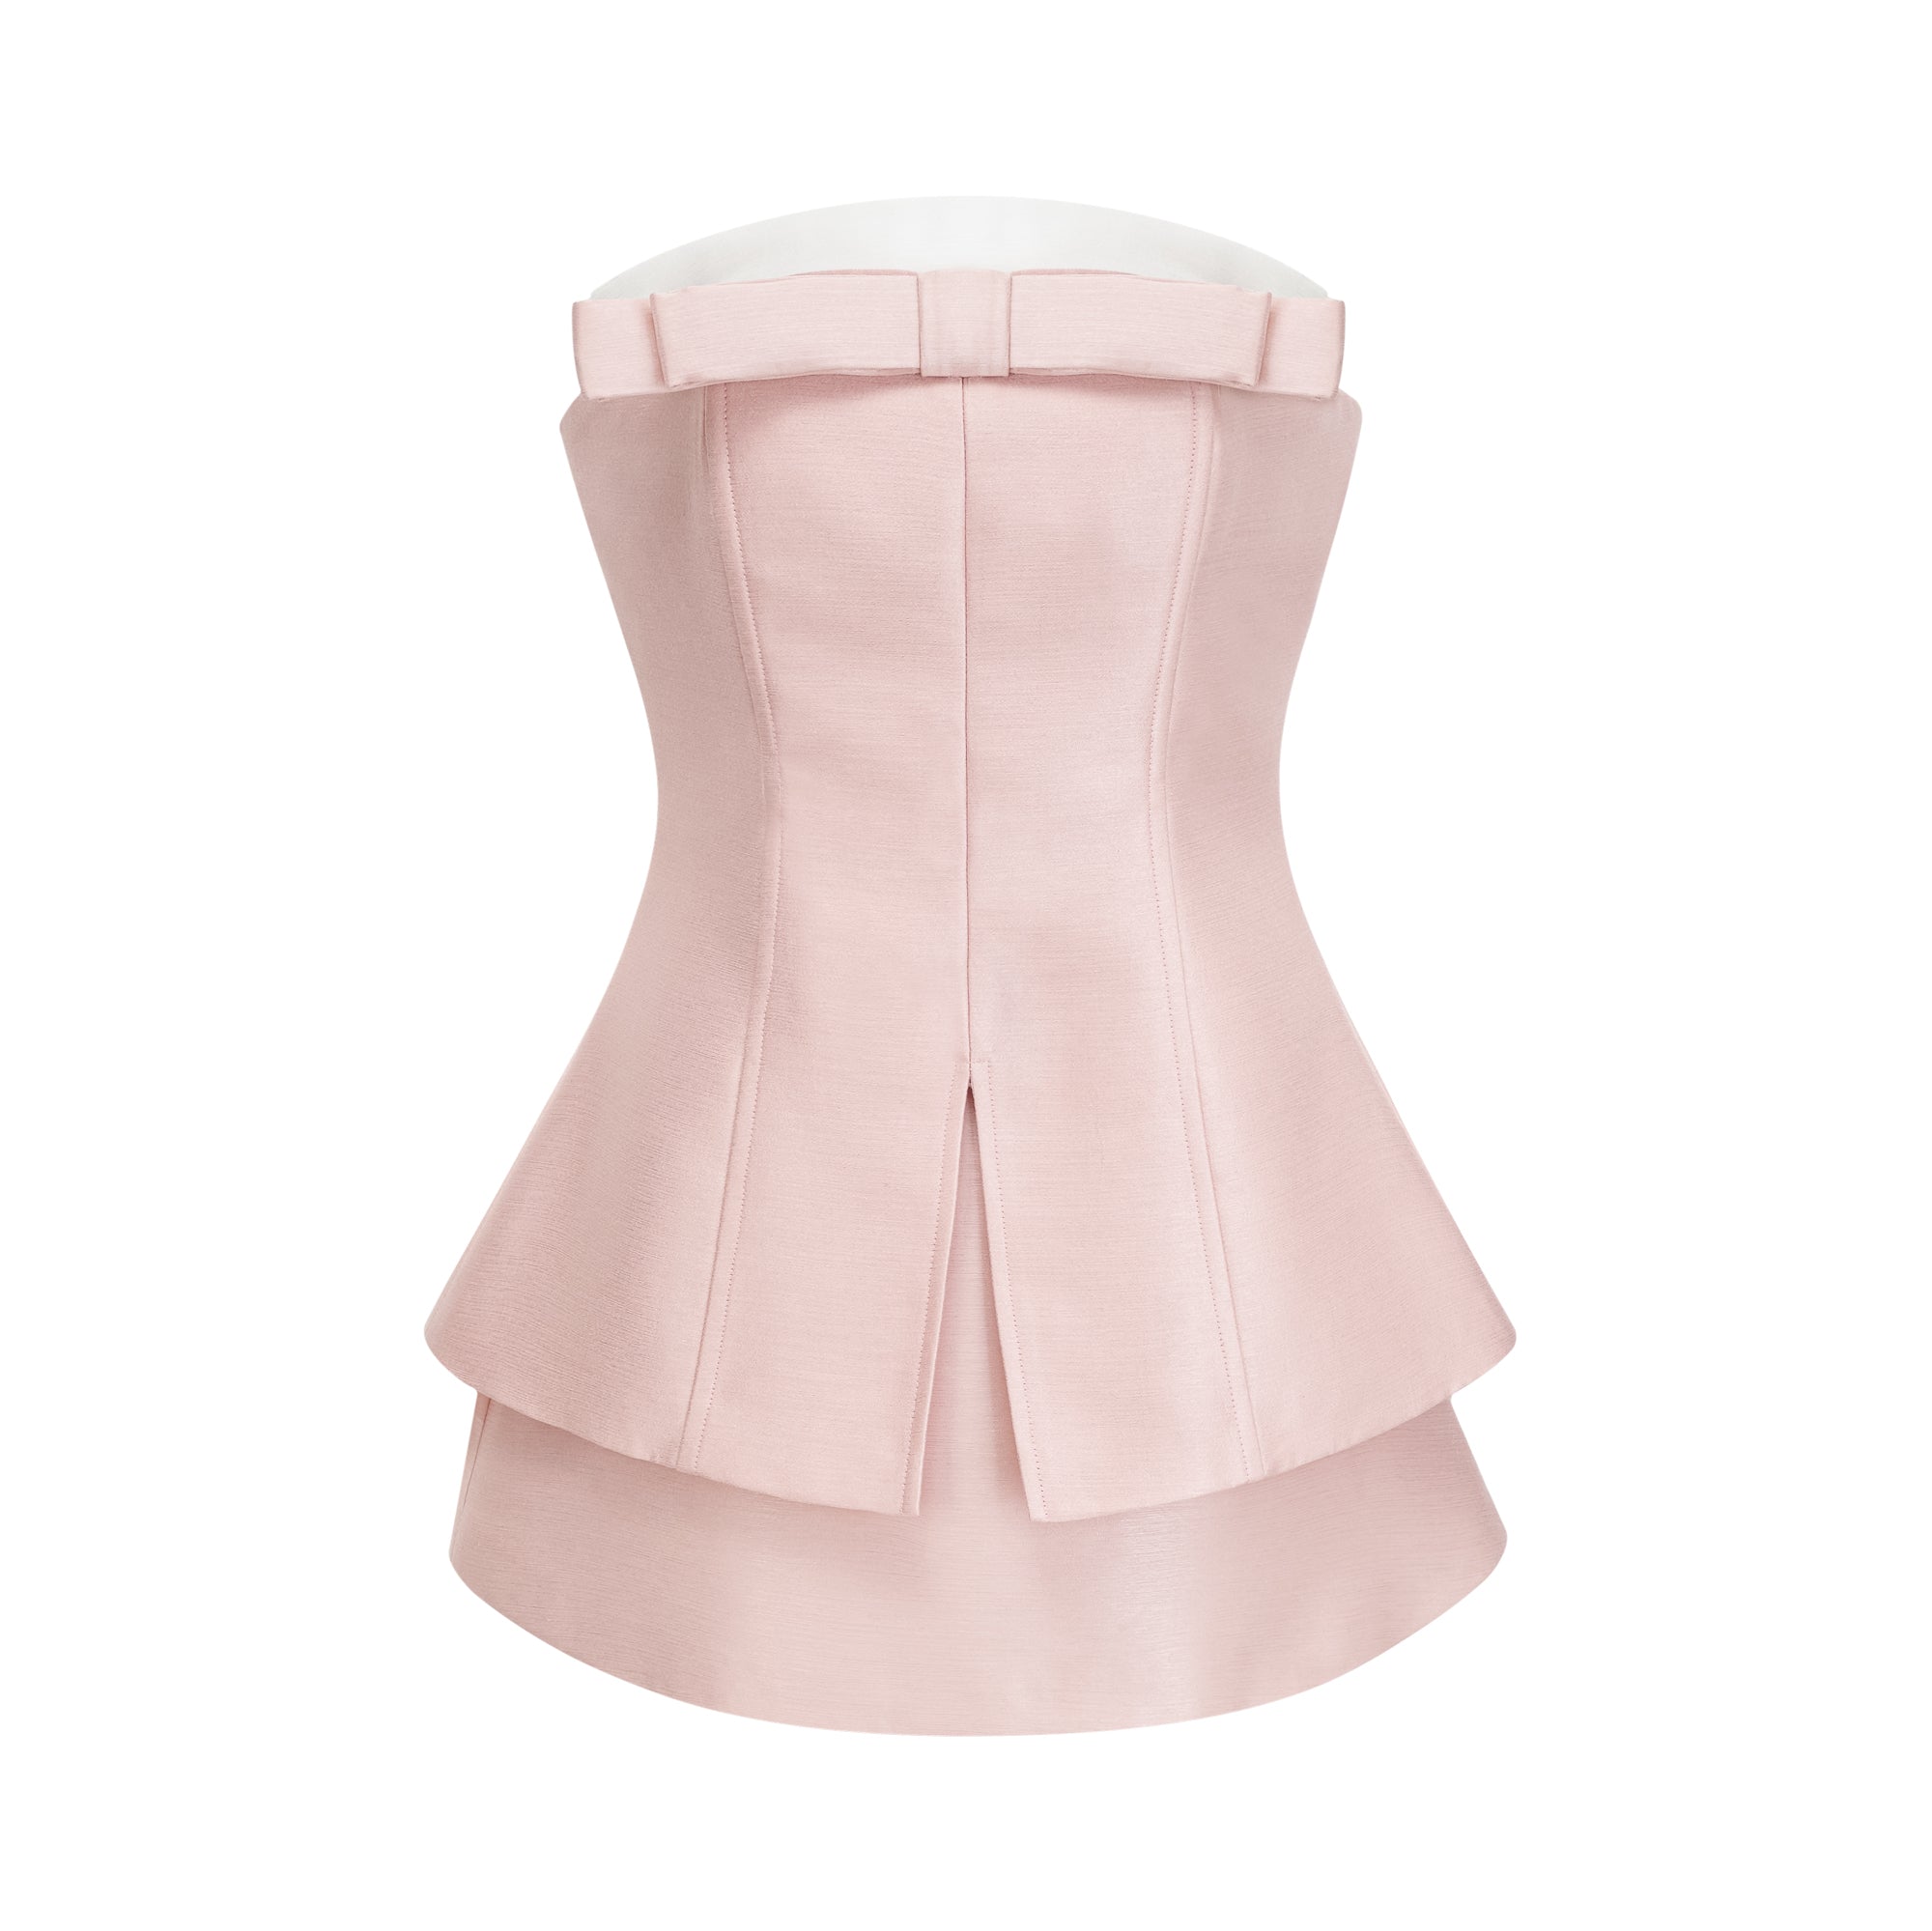 Élodie pink bowknot top & skirt matching set